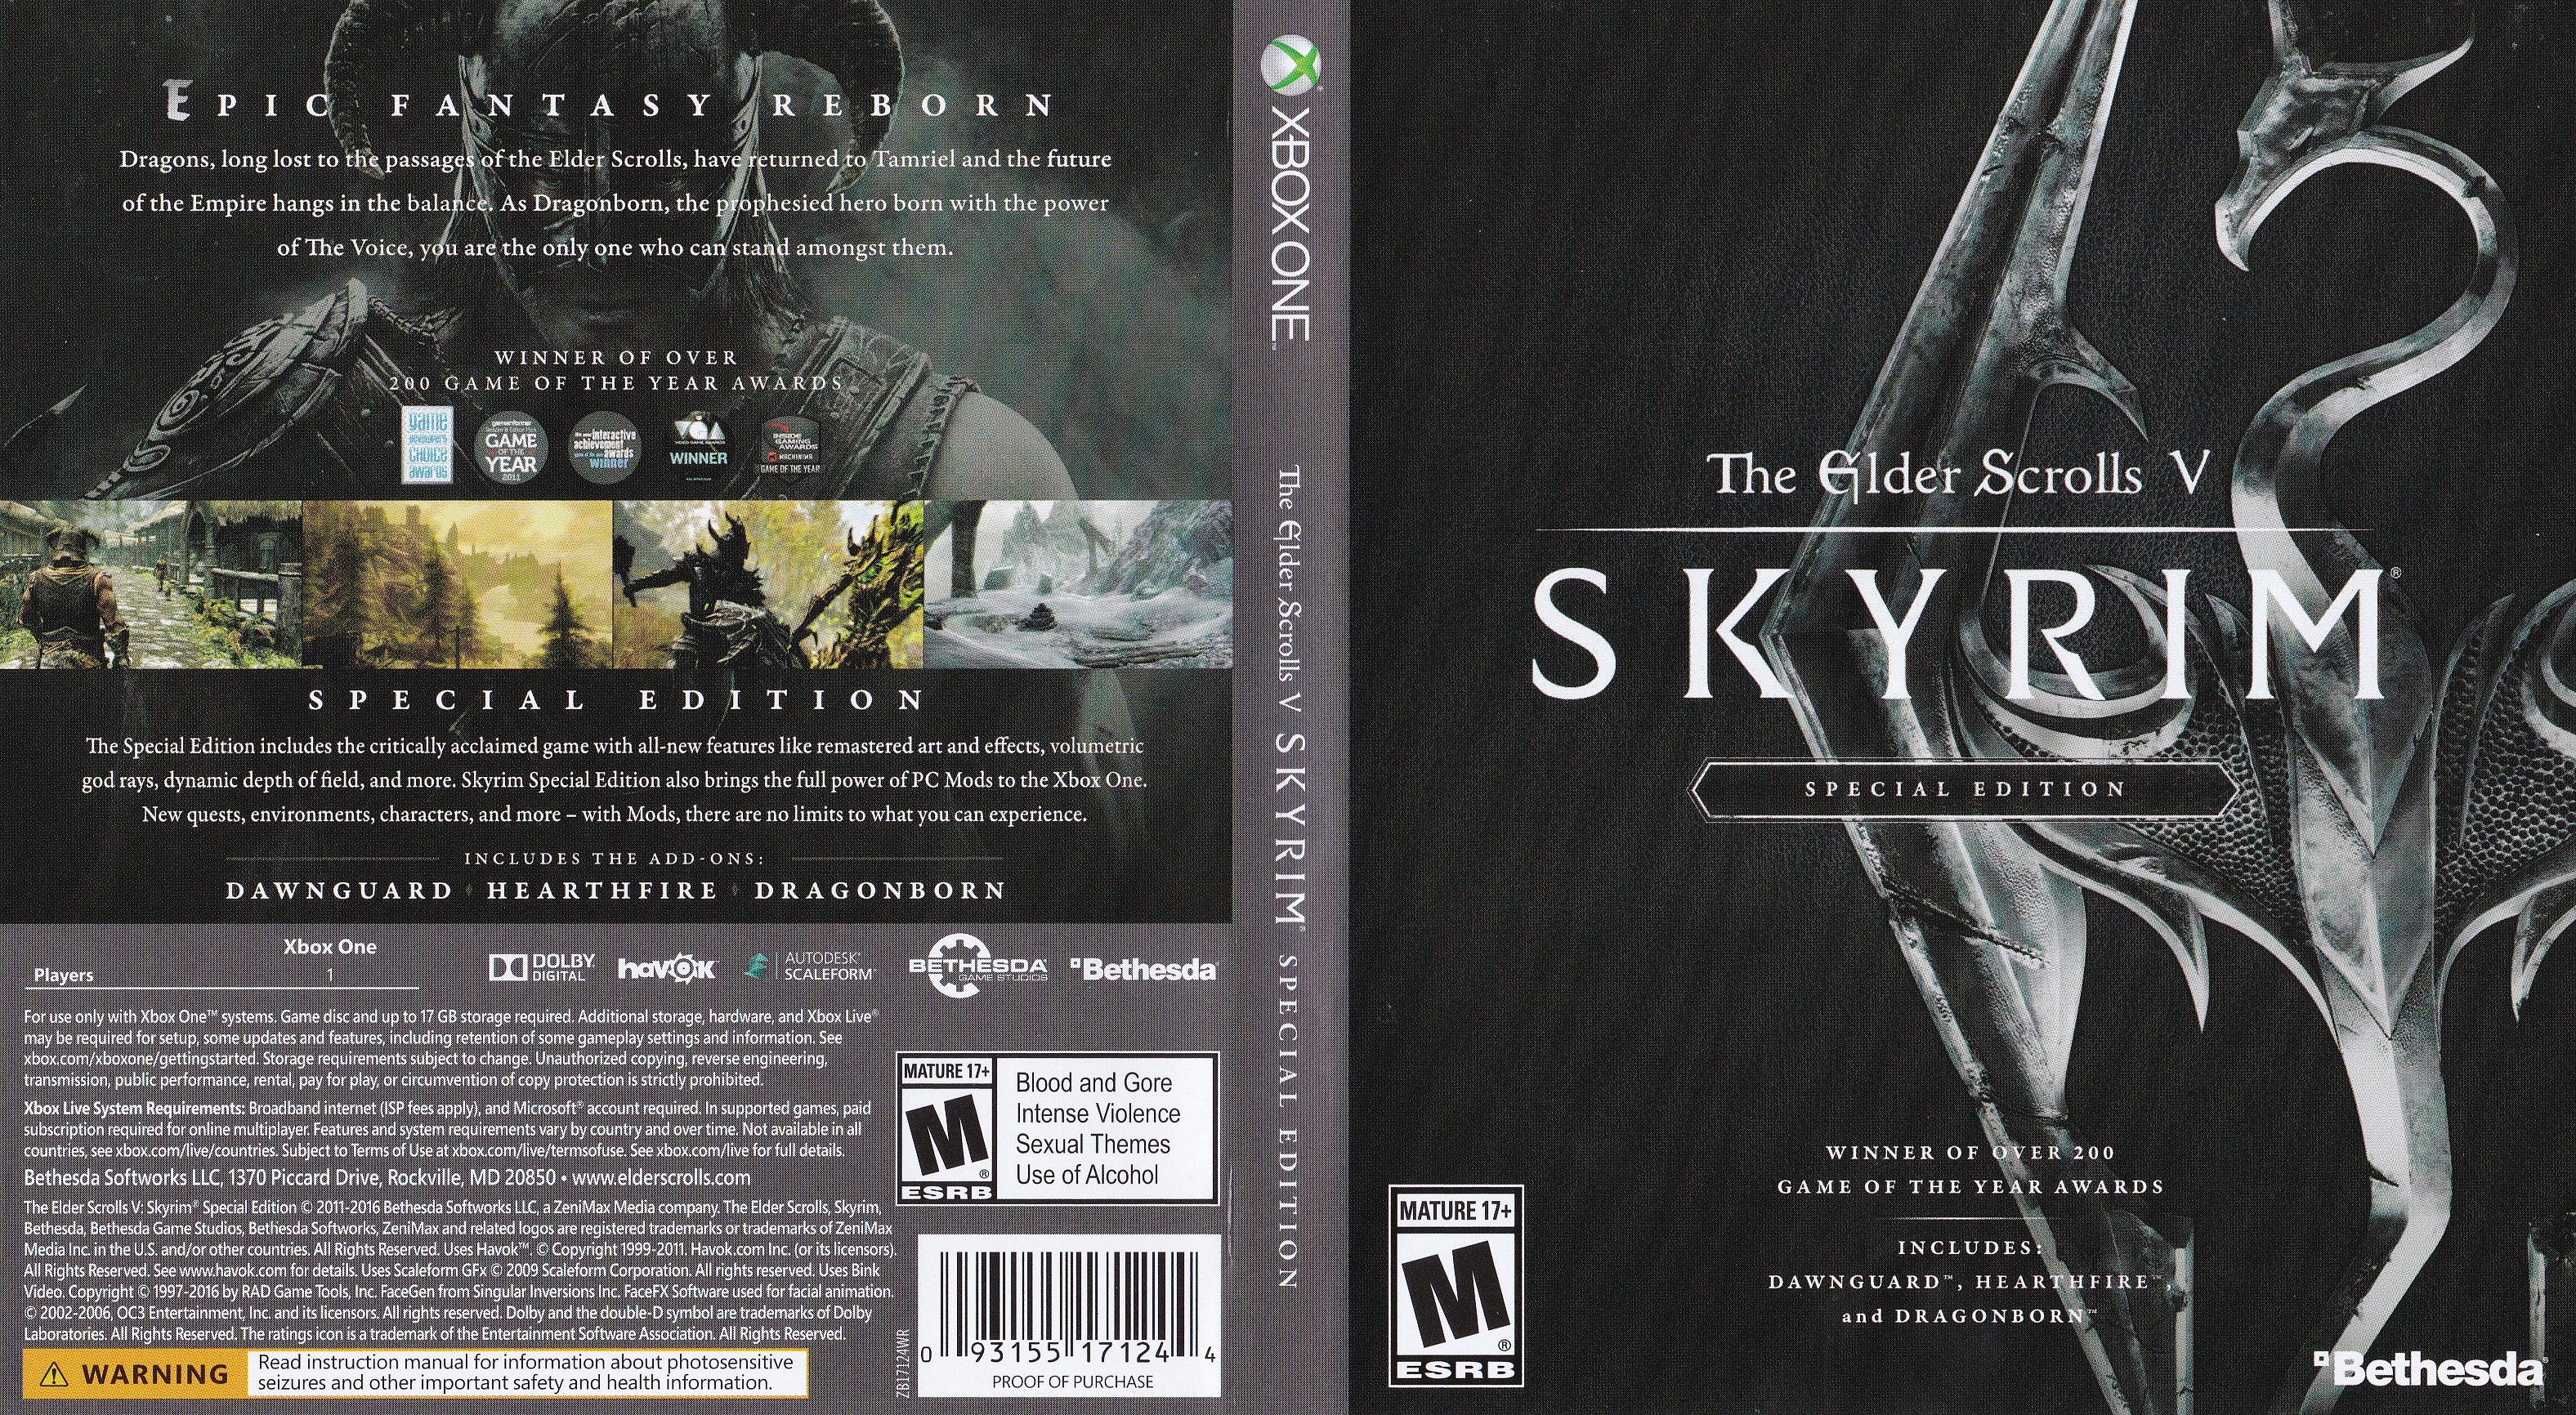 The Elder Scrolls V: Skyrim -- The Definitive Edition